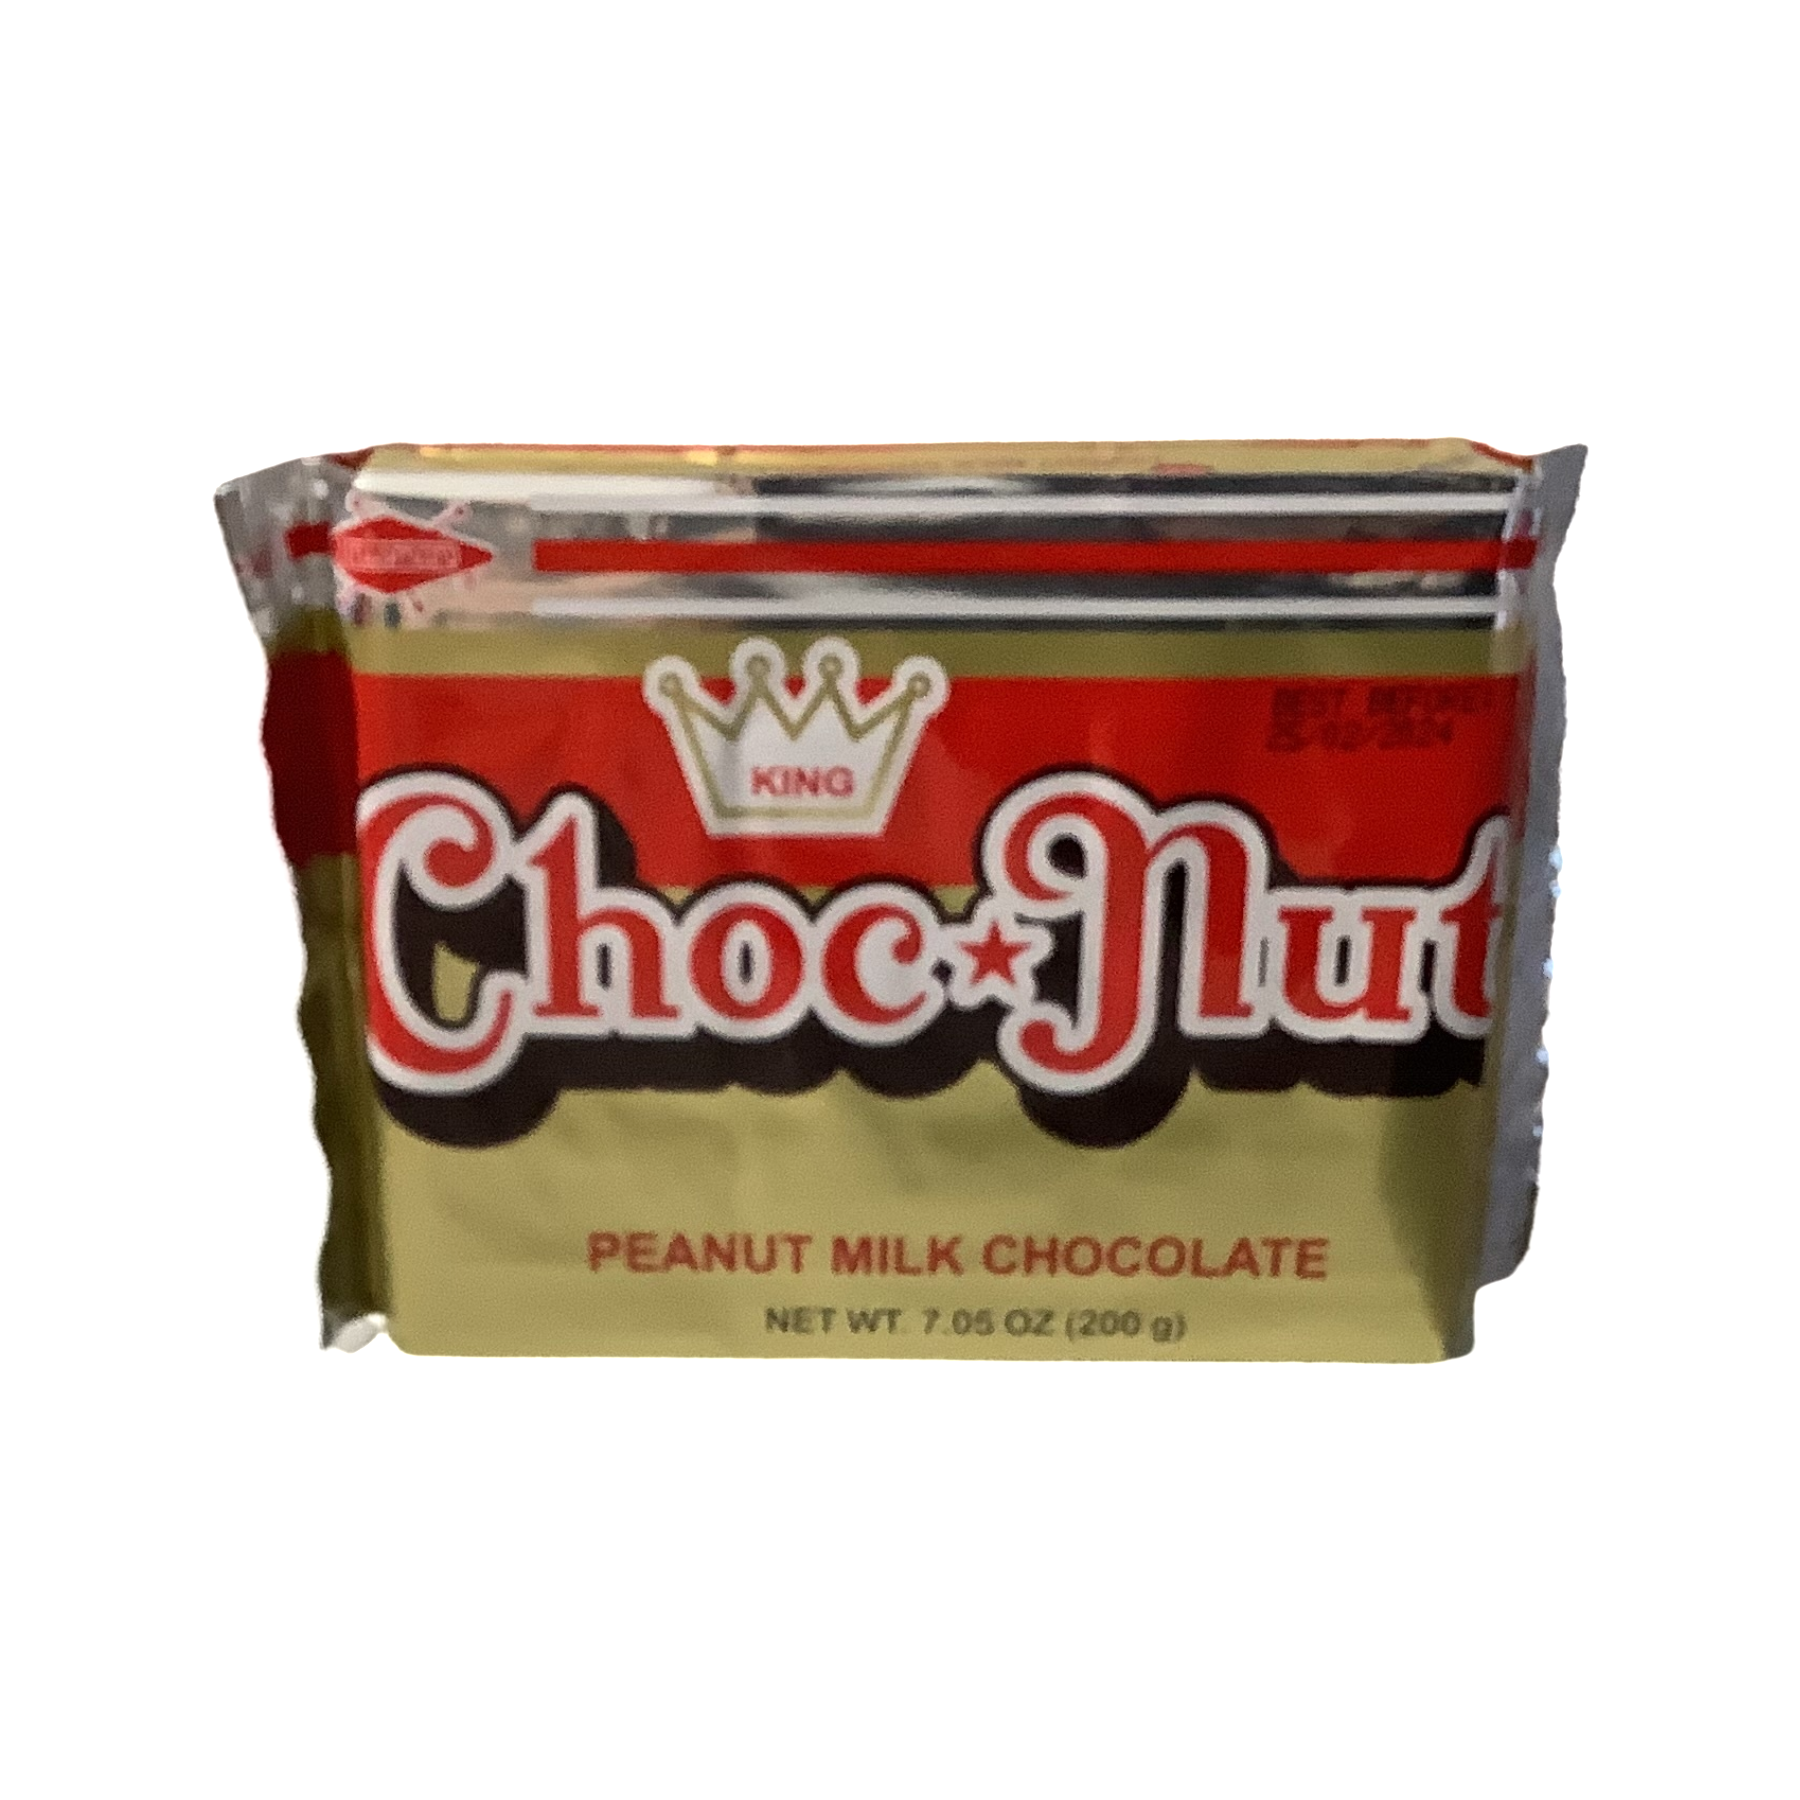 King choc-nut  peanut milk chocolate 200g